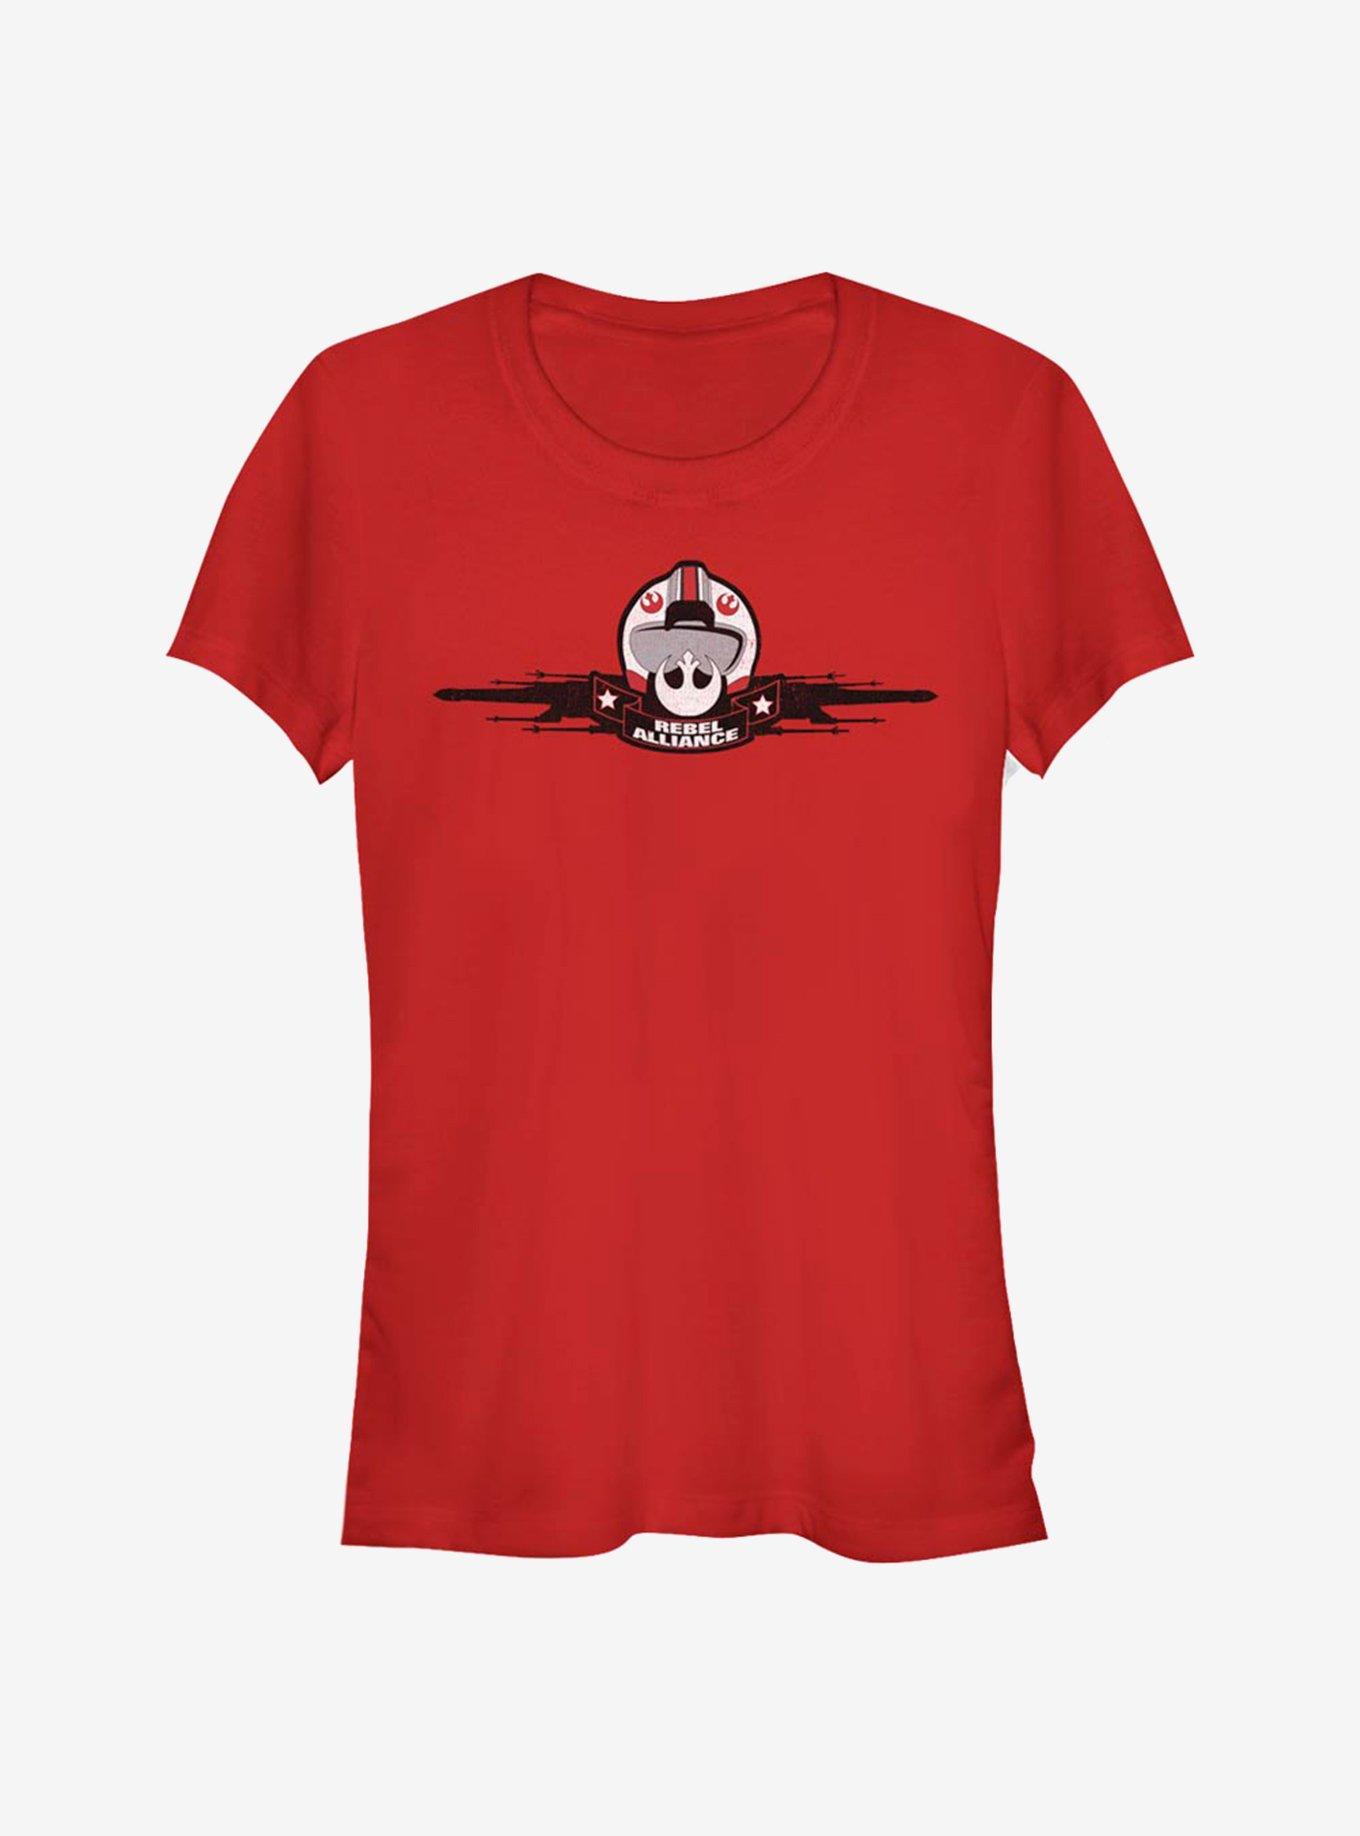 Star Wars Red Rebel Alliance Squadron Girls T-Shirt, RED, hi-res